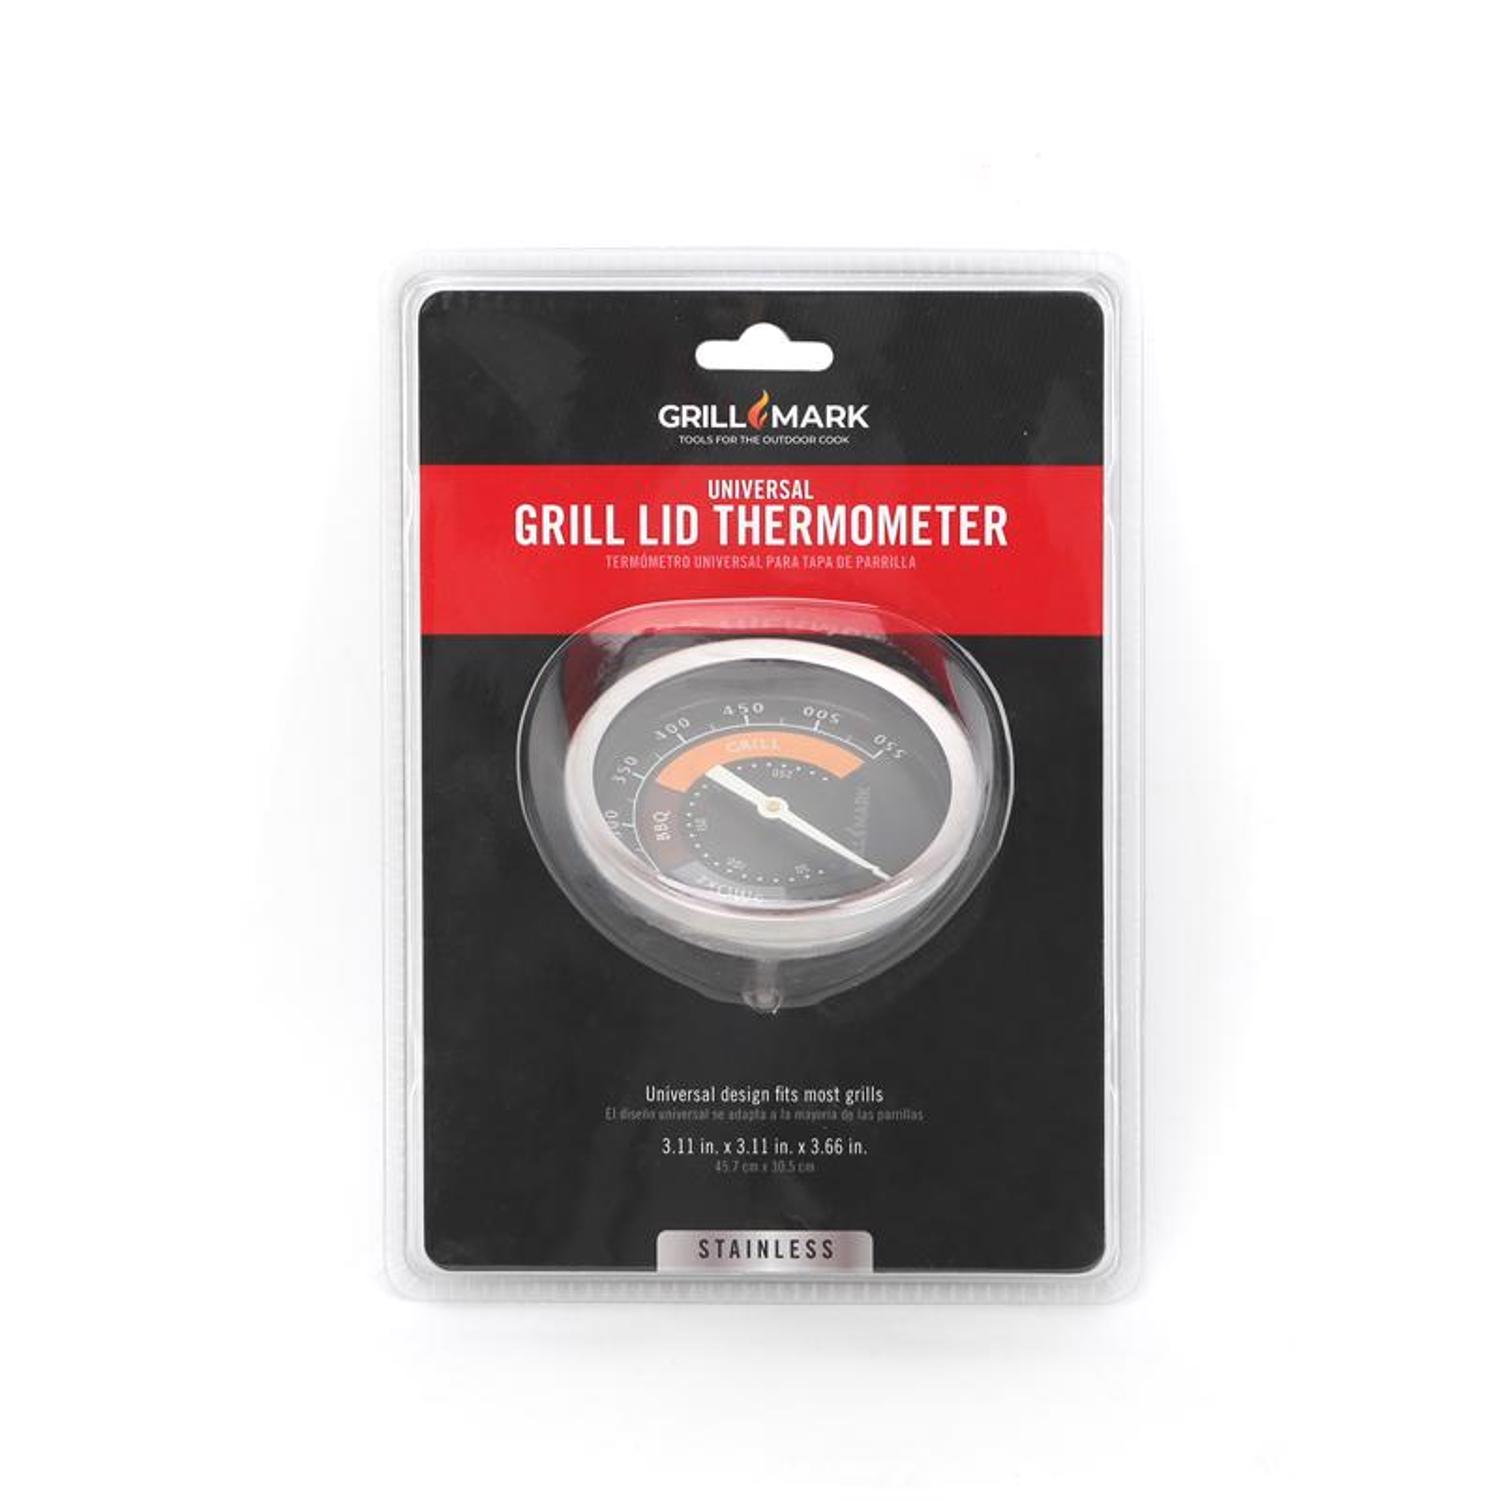 Escali Analog Meat Thermometer - Ace Hardware